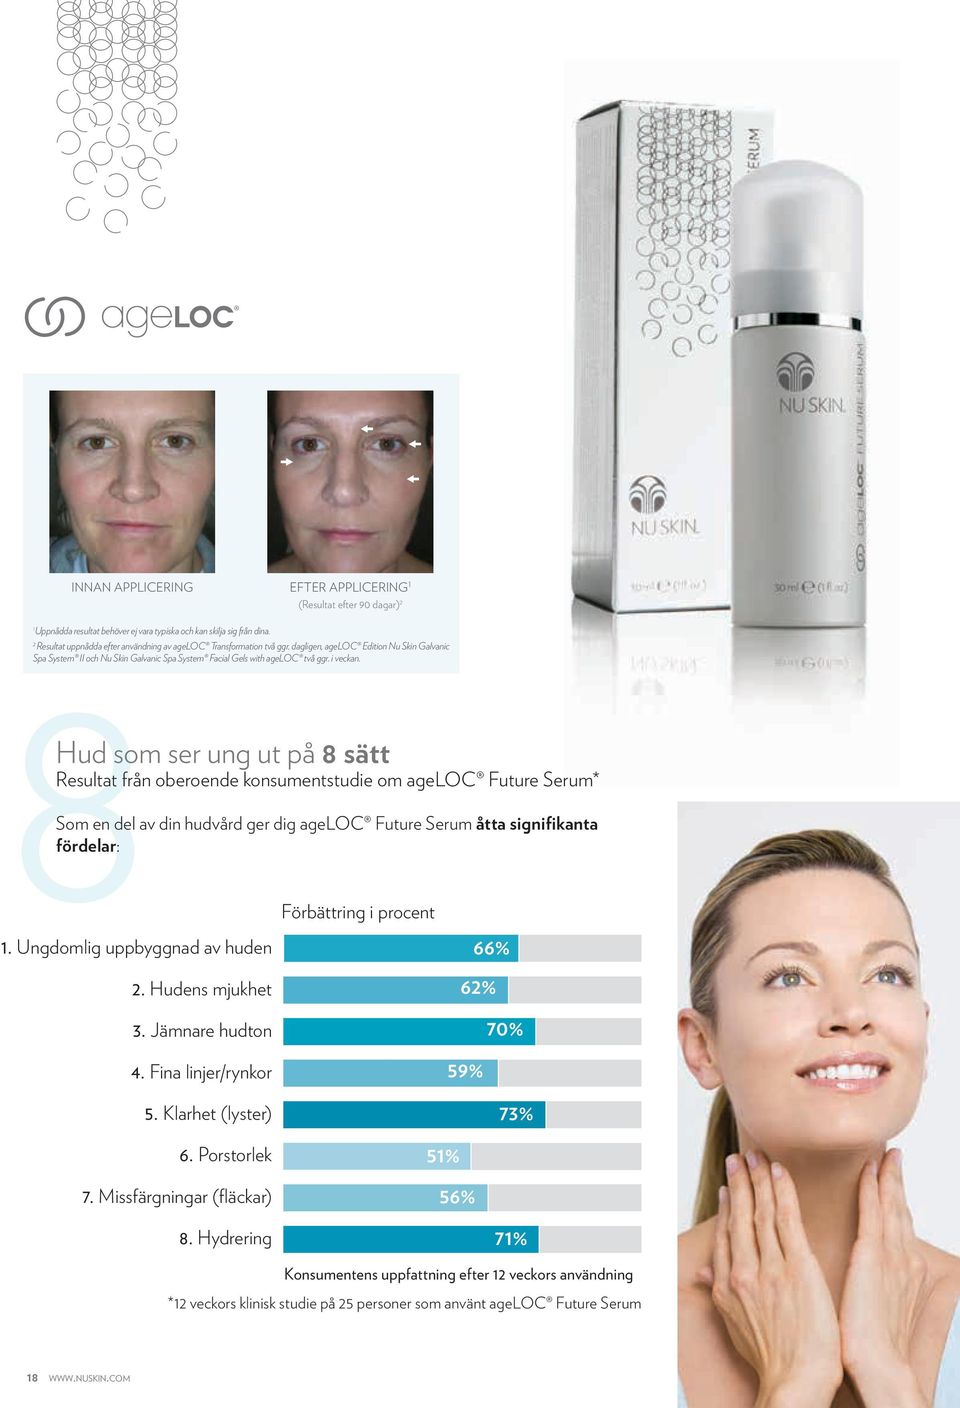 dagligen, ageloc Edition Nu Skin Galvanic Spa System II och Nu Skin Galvanic Spa System Facial Gels with ageloc två ggr. i veckan.